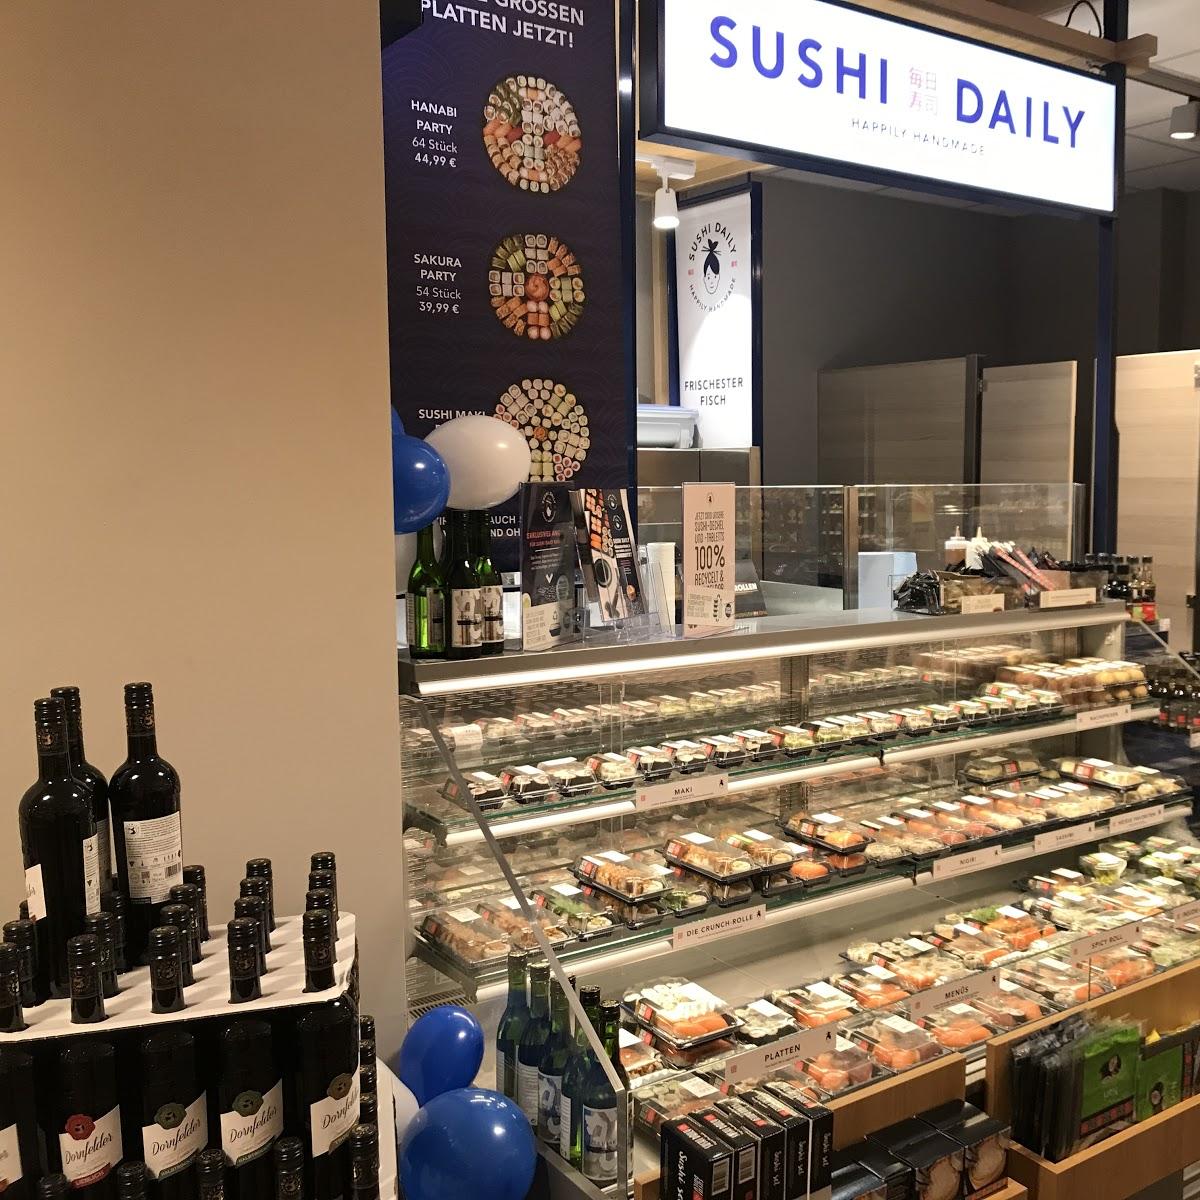 Restaurant "Sushi Daily" in Espenau